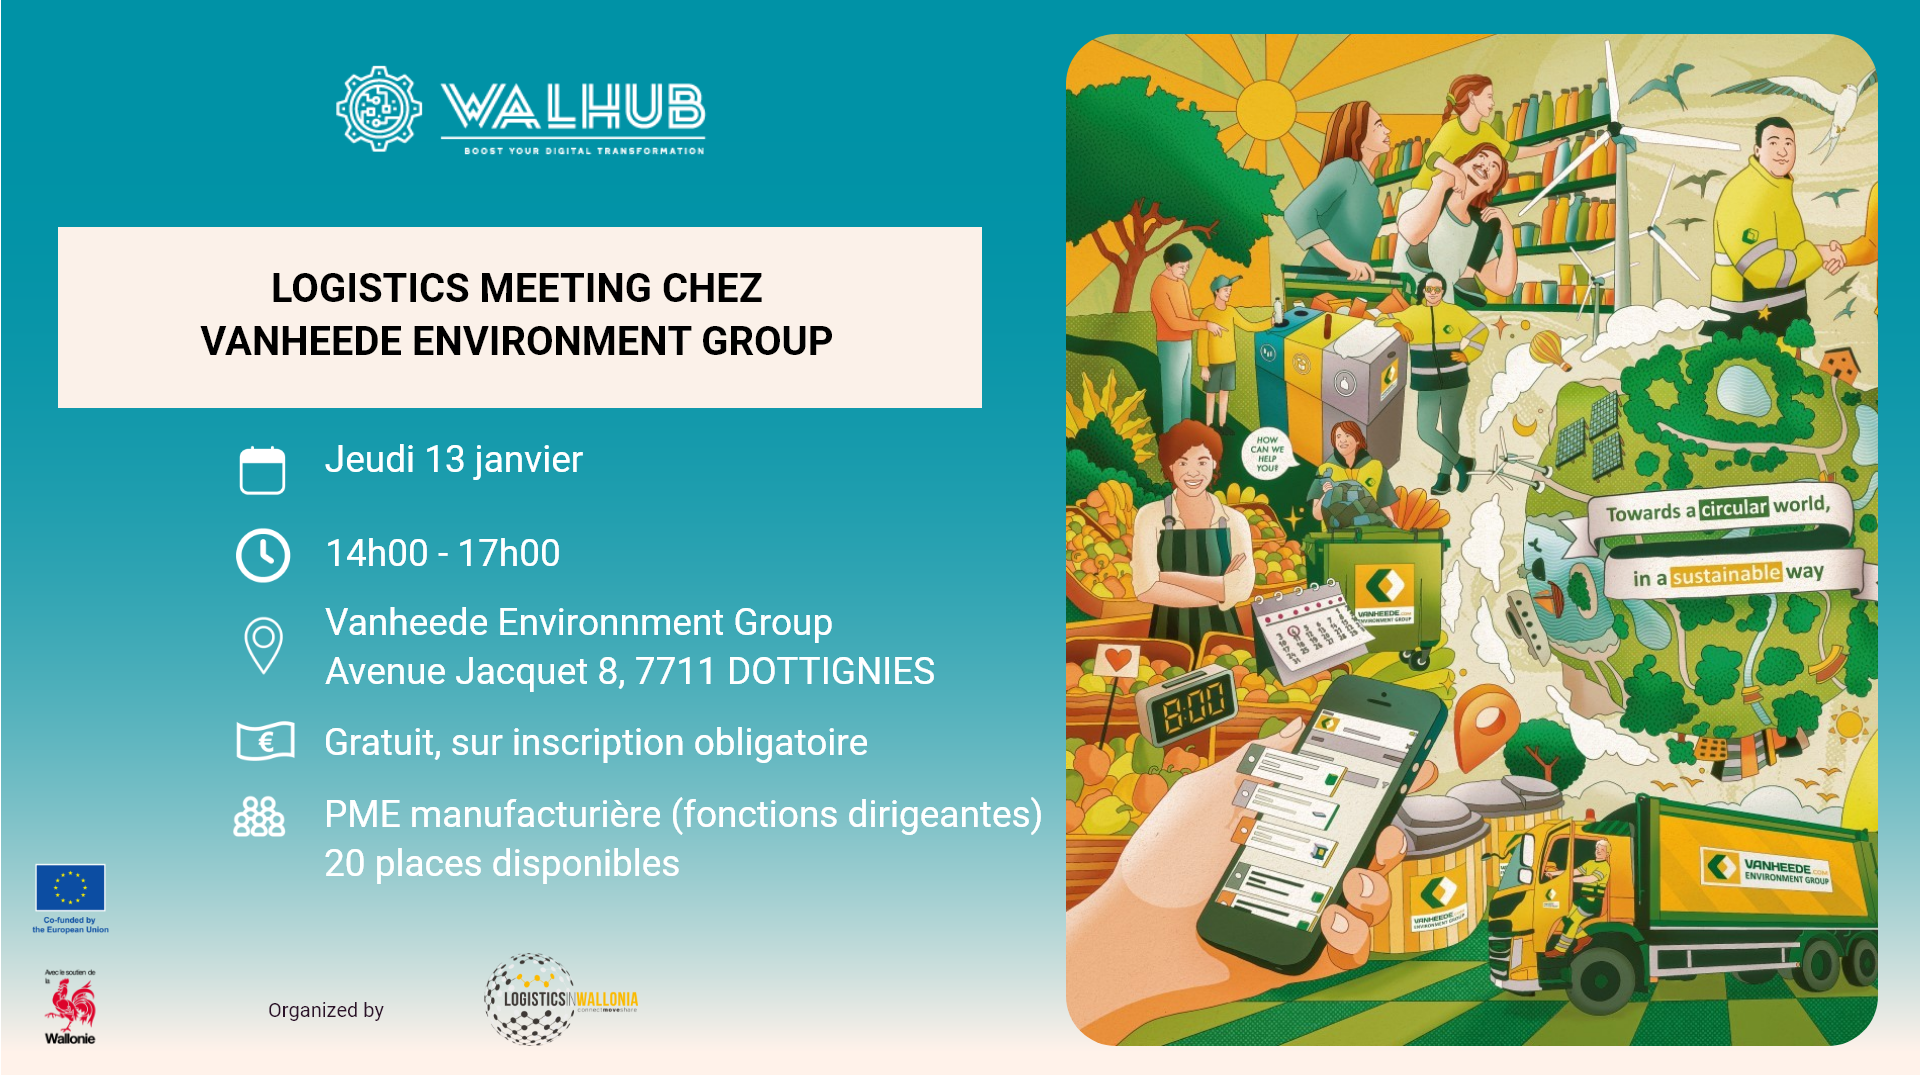 Logistics Meeting chez Vanheede Environment Group